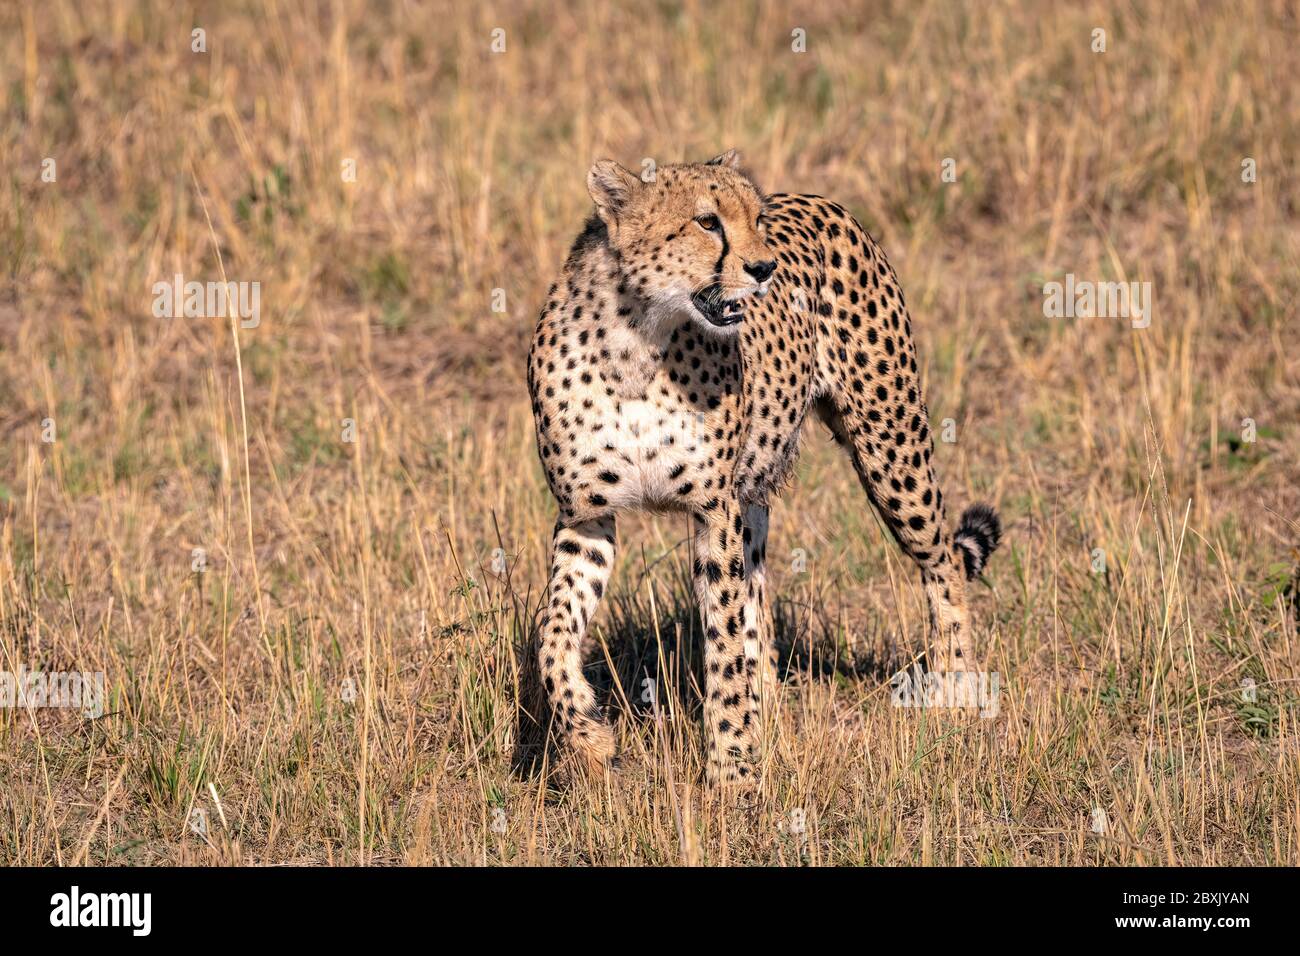 Close up of a young cheetah hunting in the tall grass. Image taken in the Maasai Mara, Kenya. Stock Photo